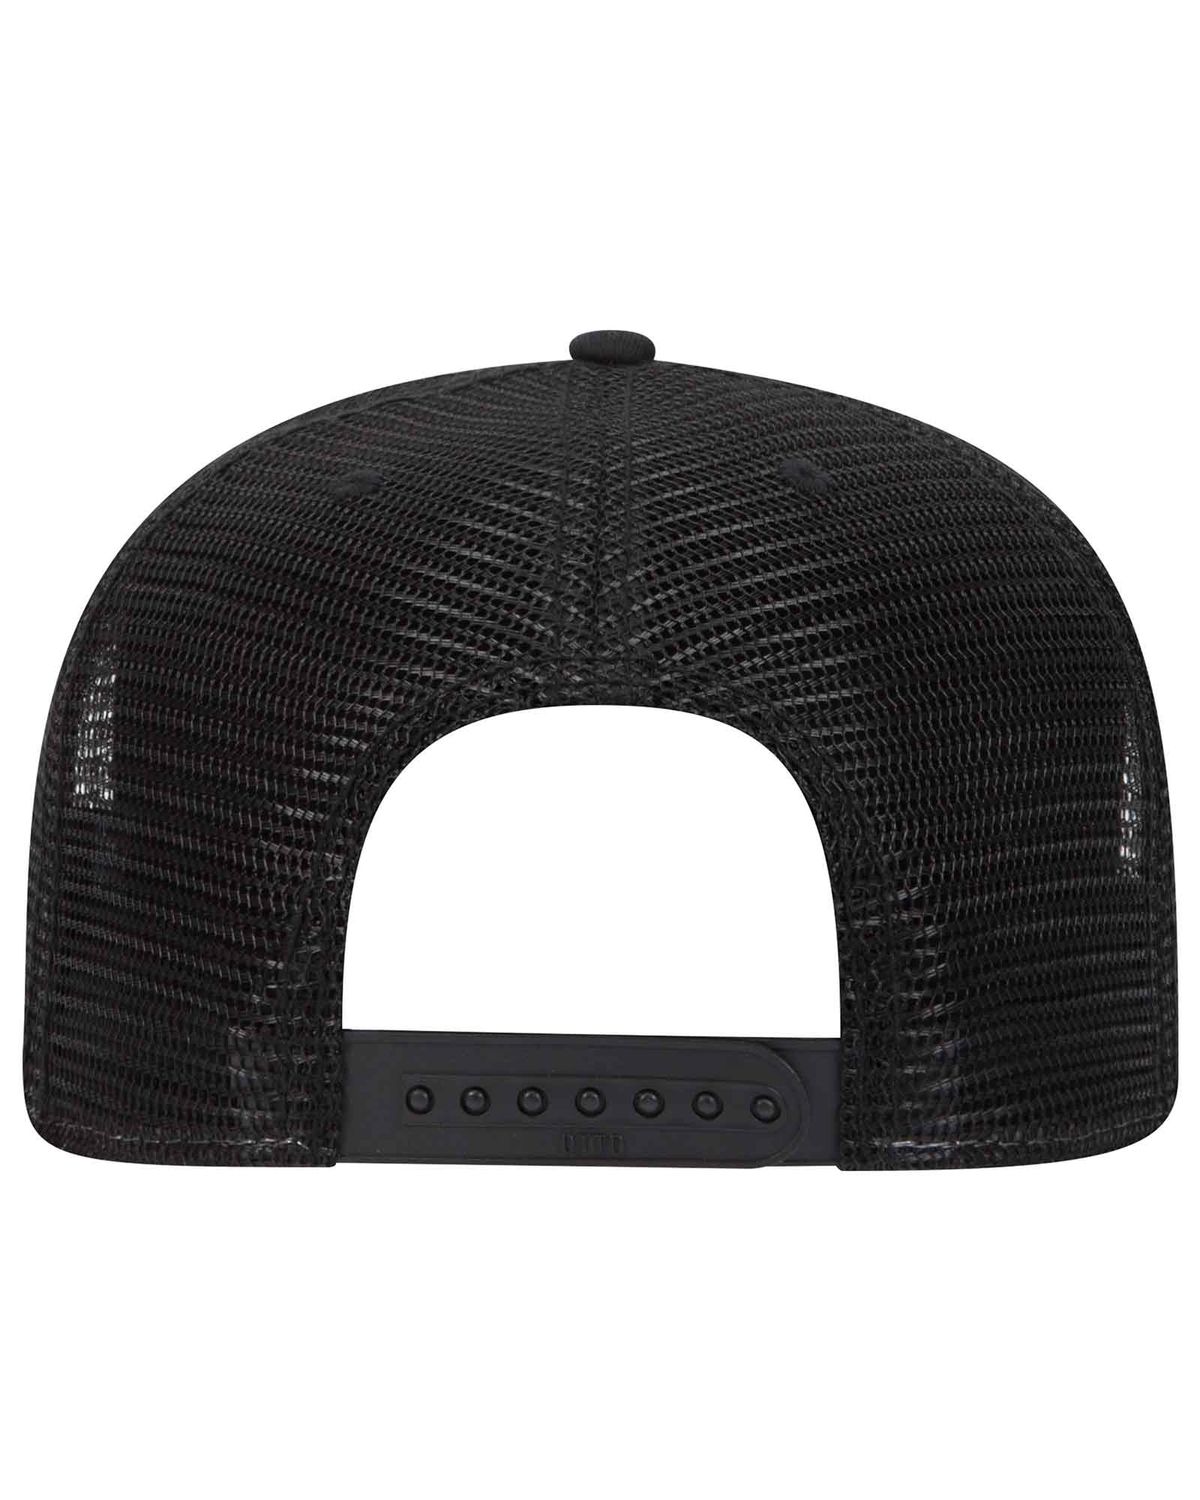 'OTTO CAP 154-1174 "otto snap" 5 panel mid profile mesh back trucker snapback hat'